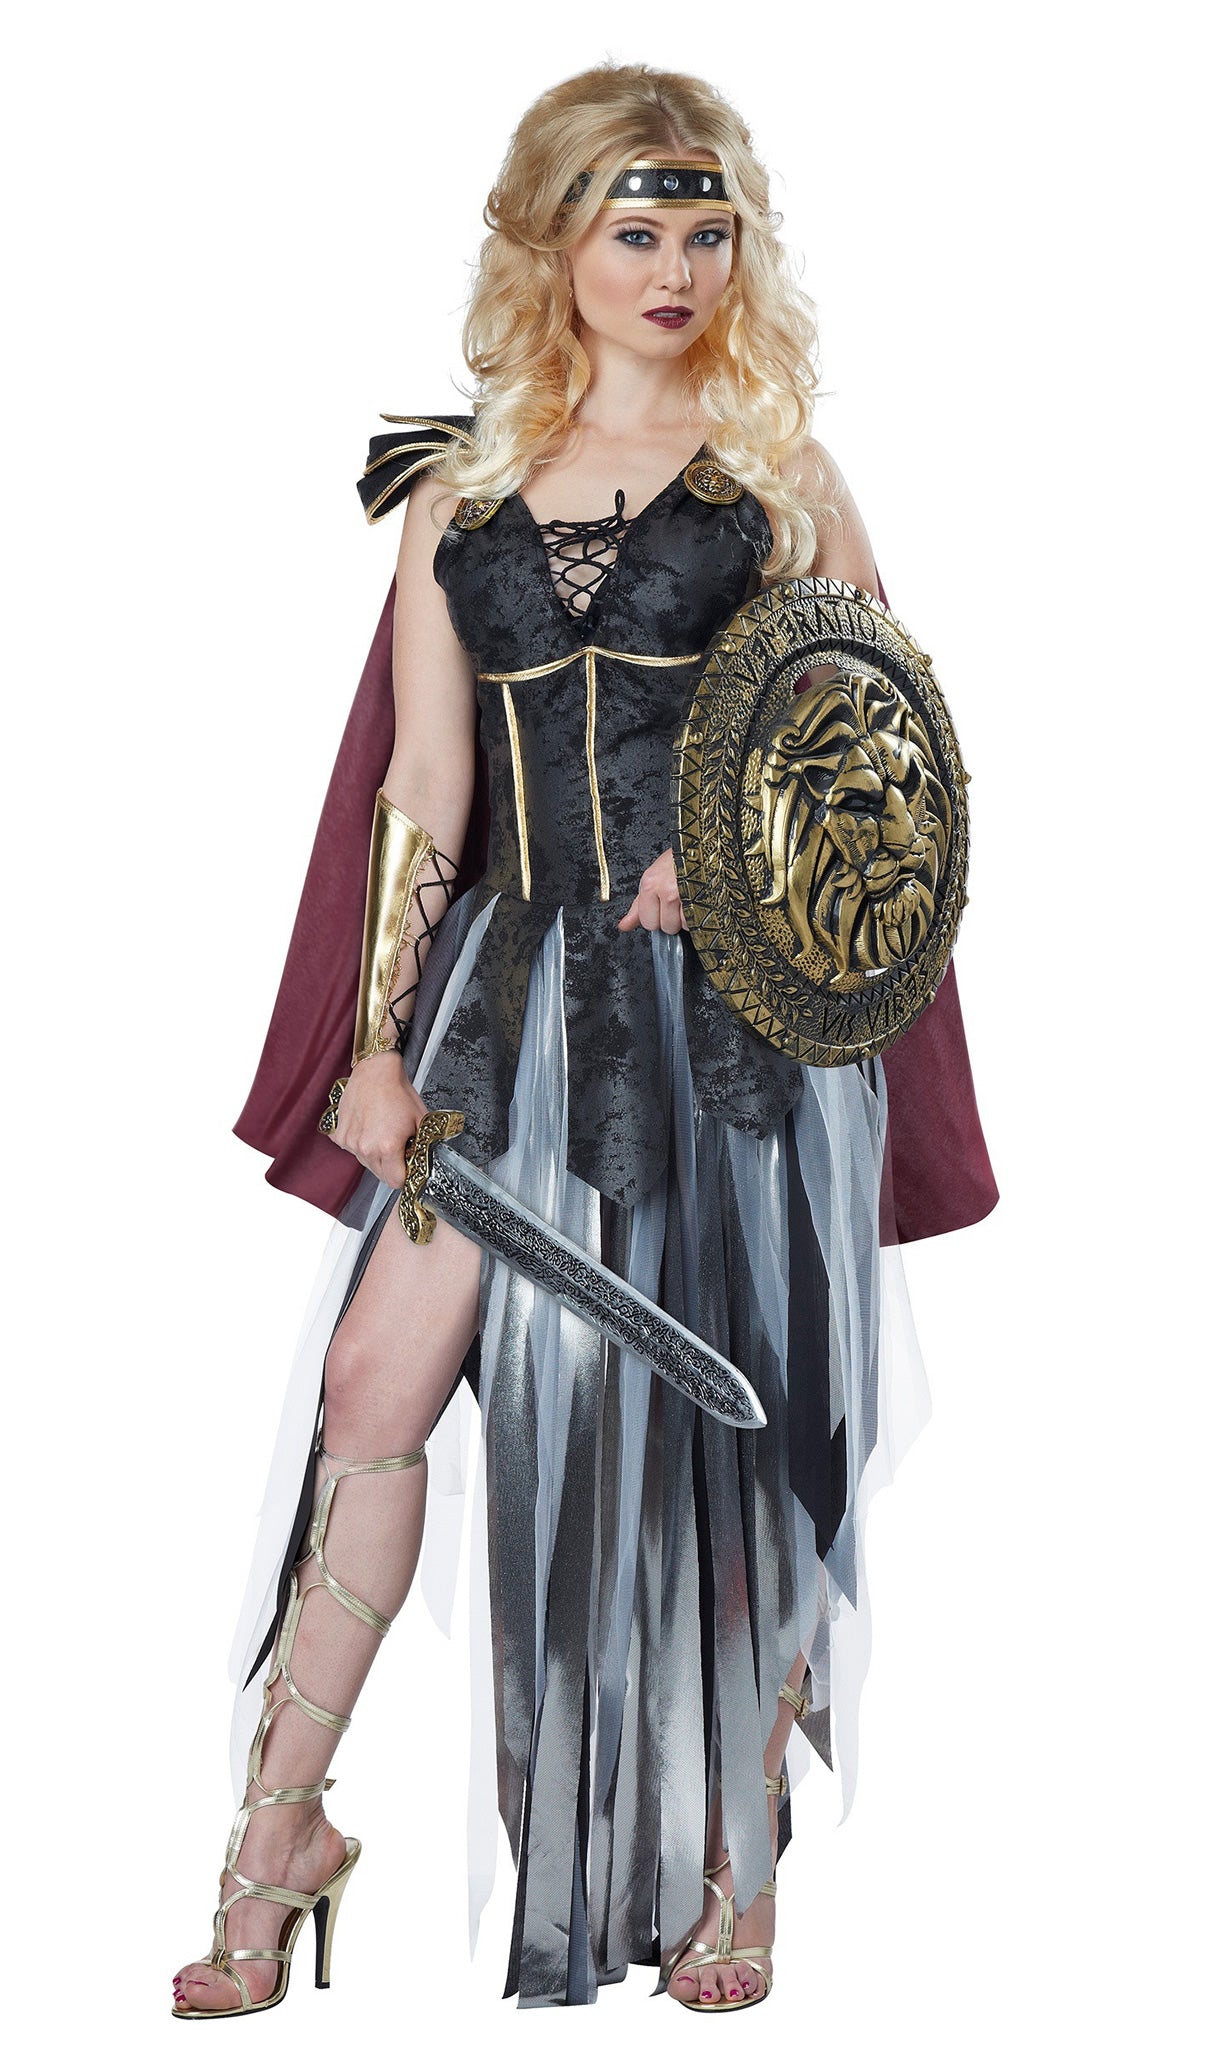 Roman gladiator dress with shorts, wrist cuffs and headband